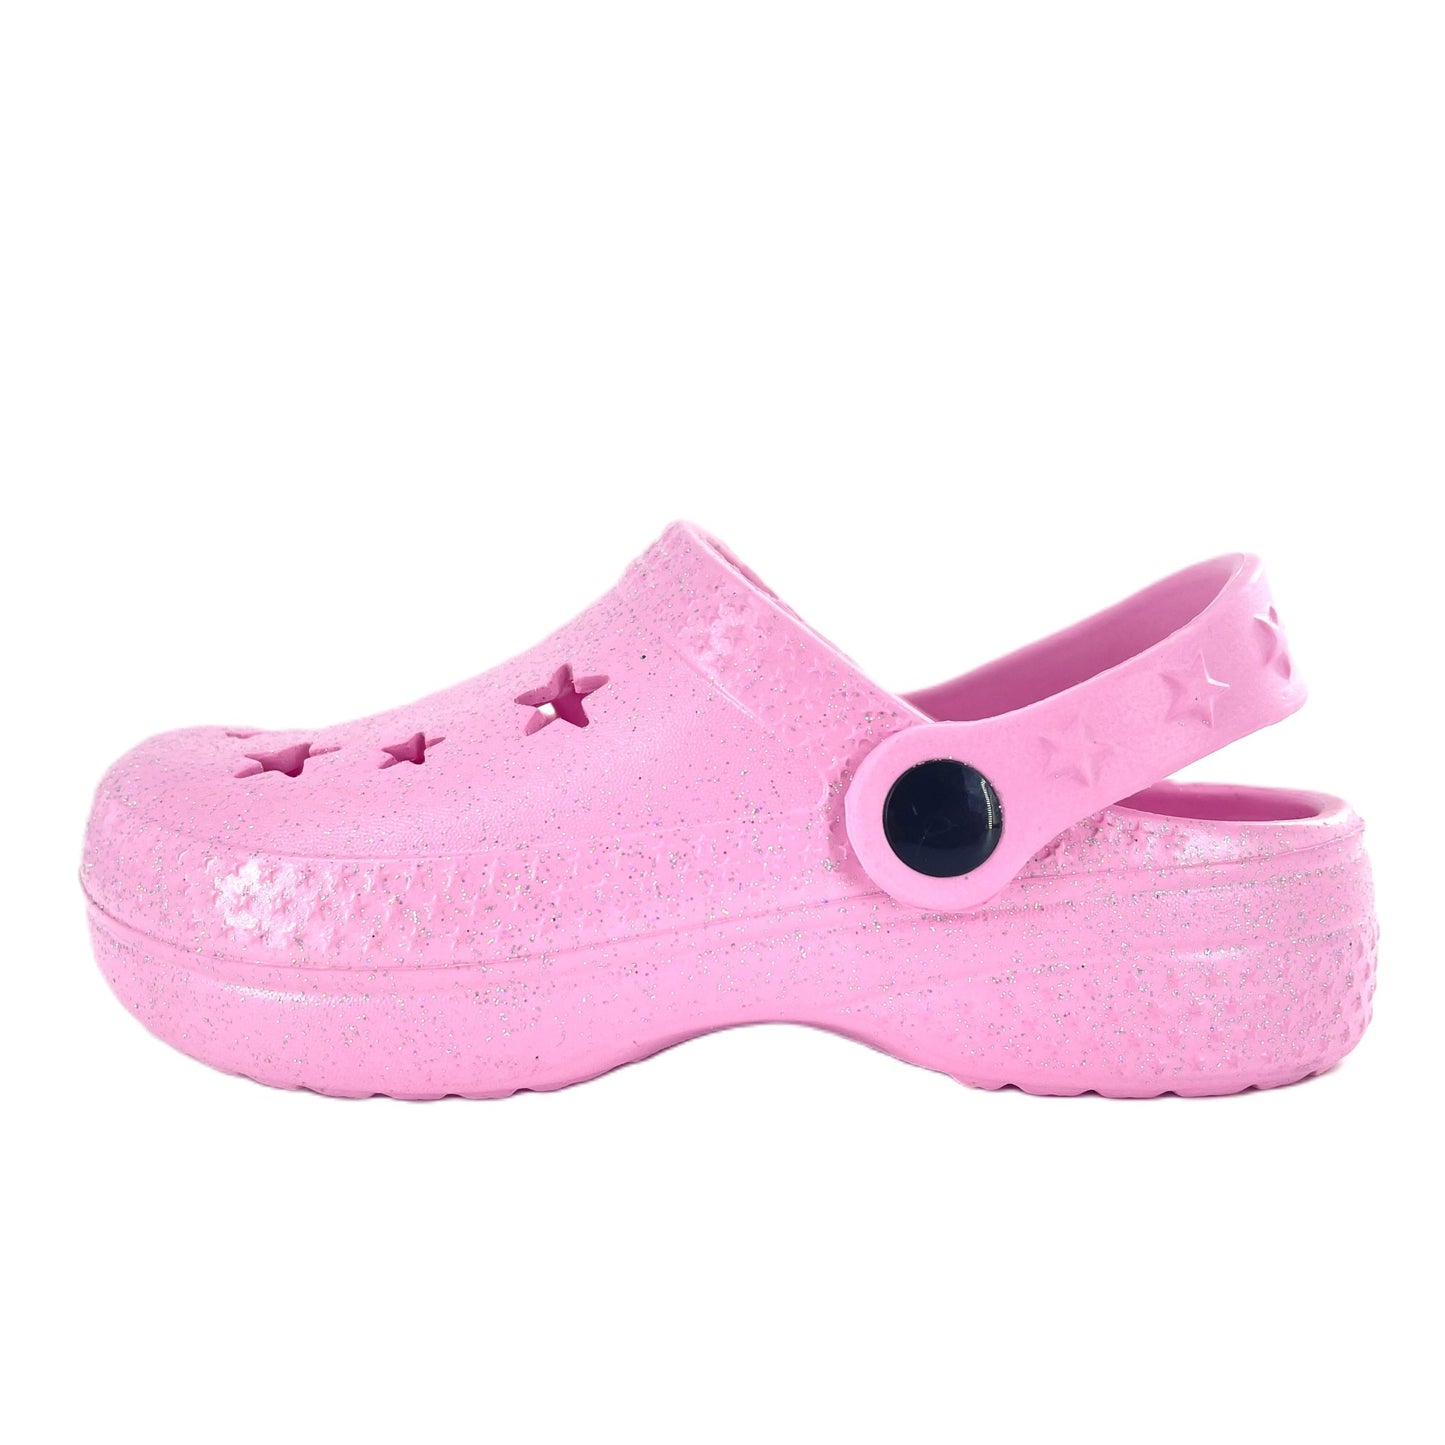 Girls Glittery Clogs Lightweight Summer Sandals Beach Pool Shoes - Lilac or Pink